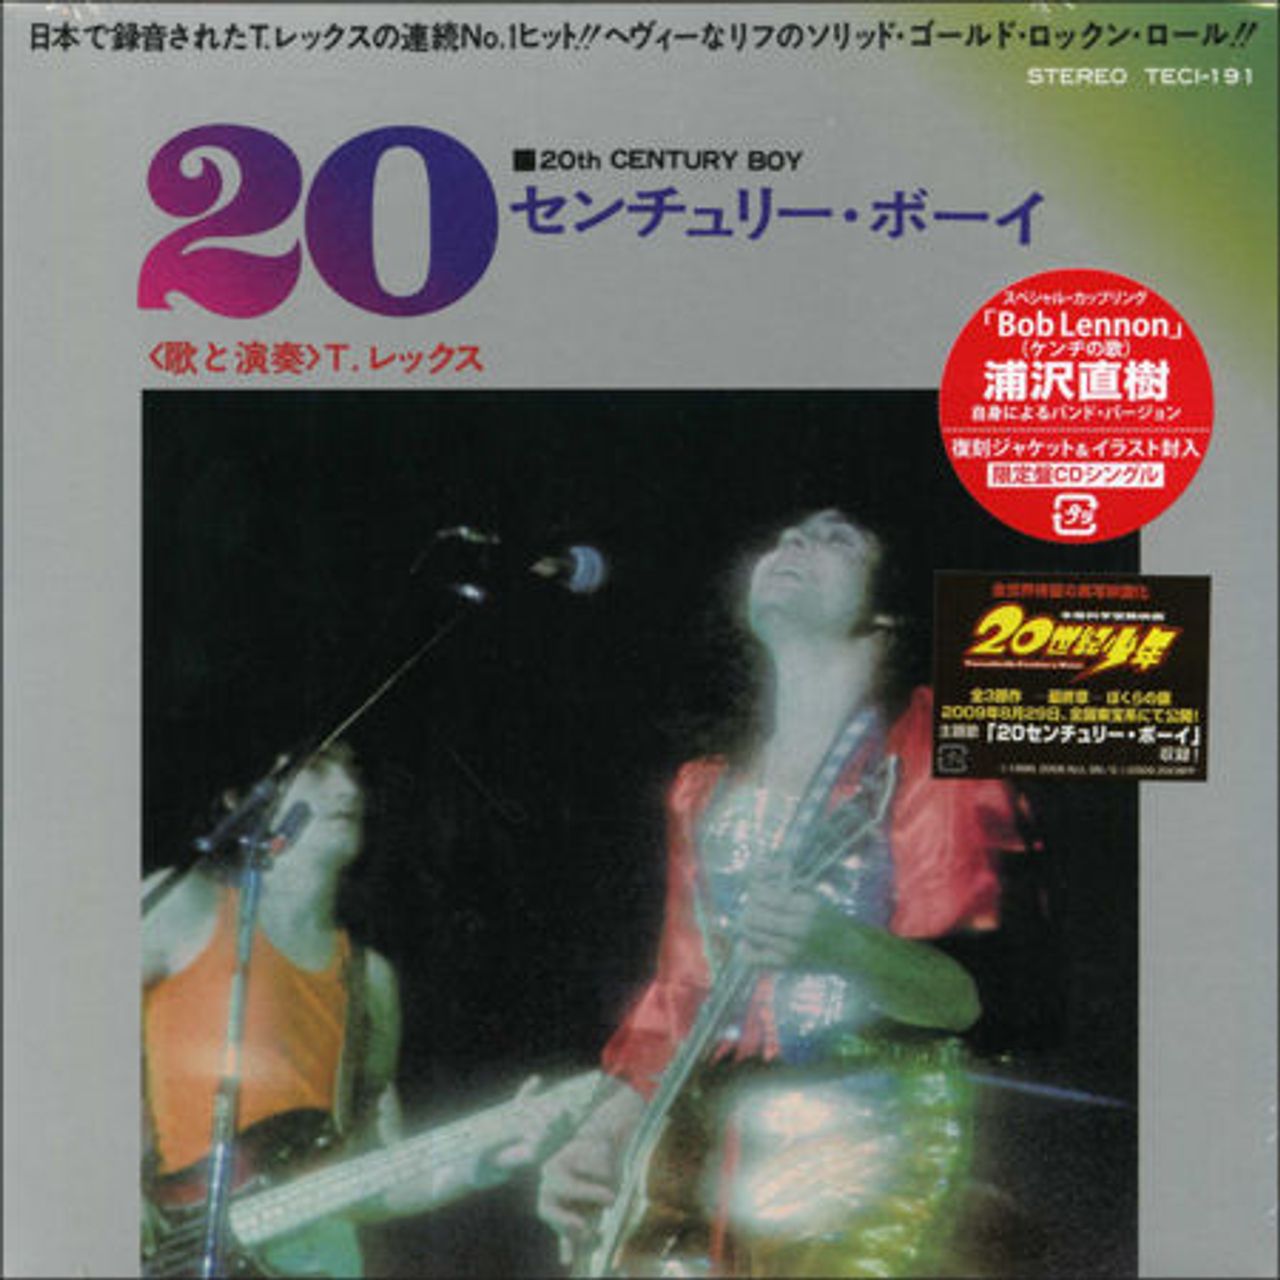 T-Rex / Tyrannosaurus Rex 20th Century Boys - Final Chapter Japanese CD  single